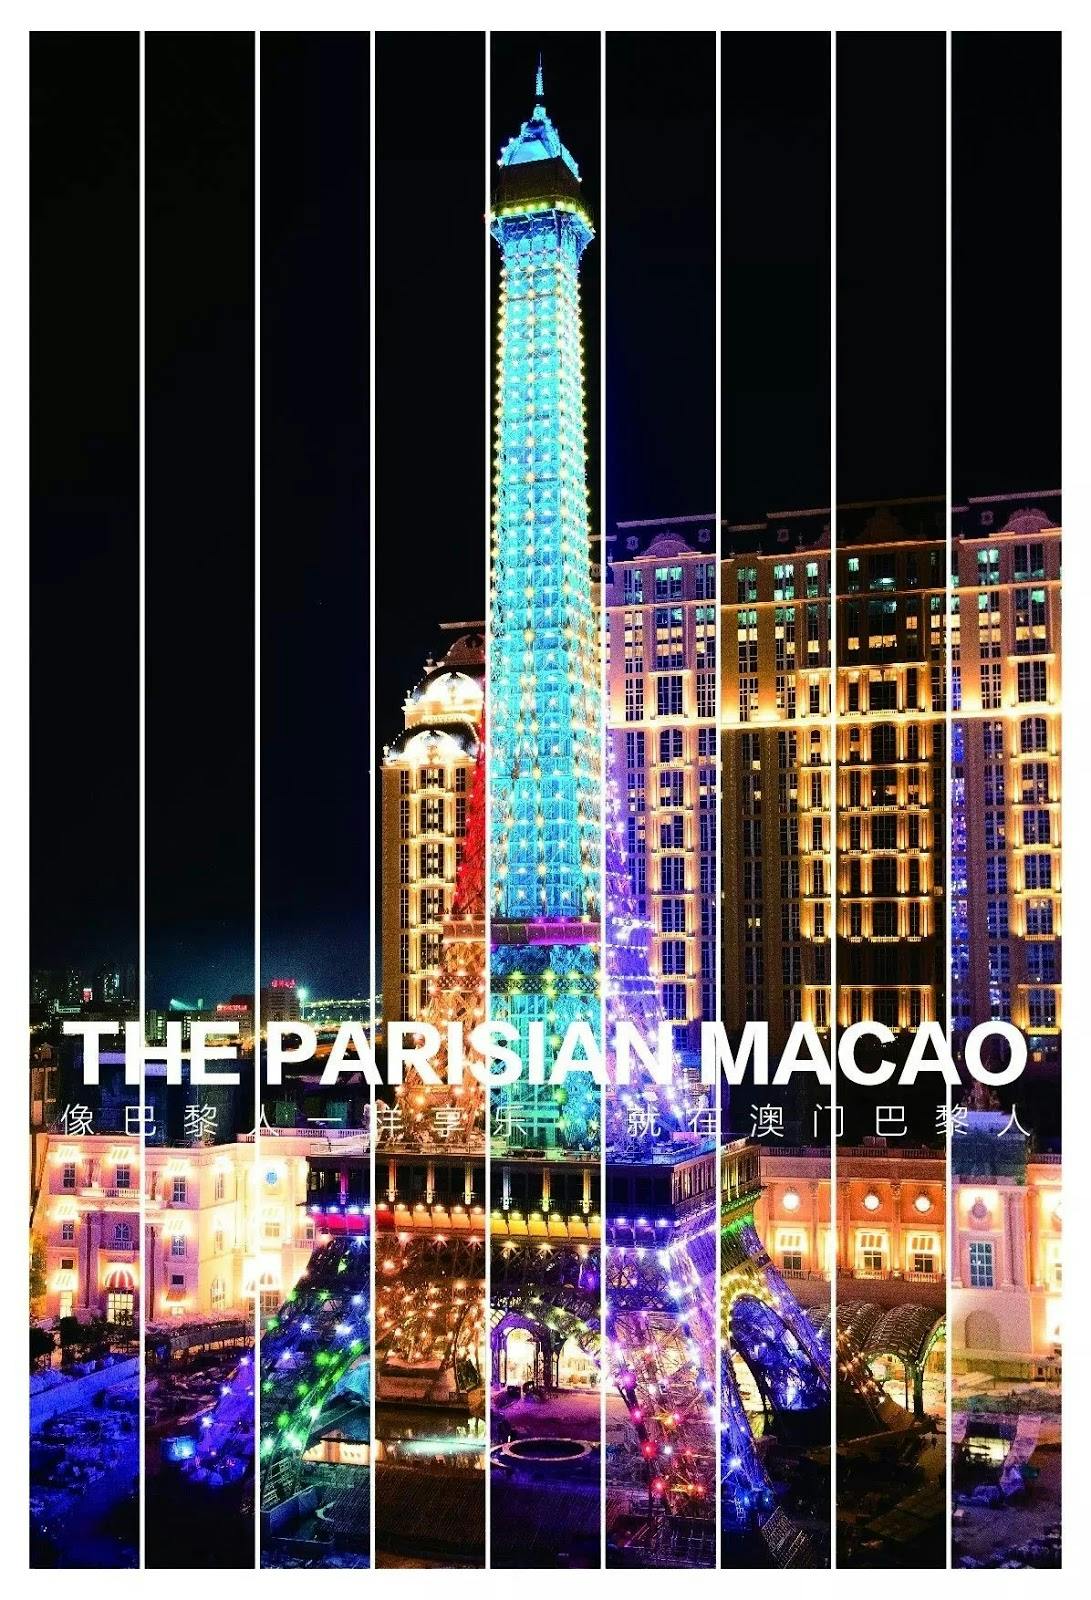 Image - The Parisian Macao